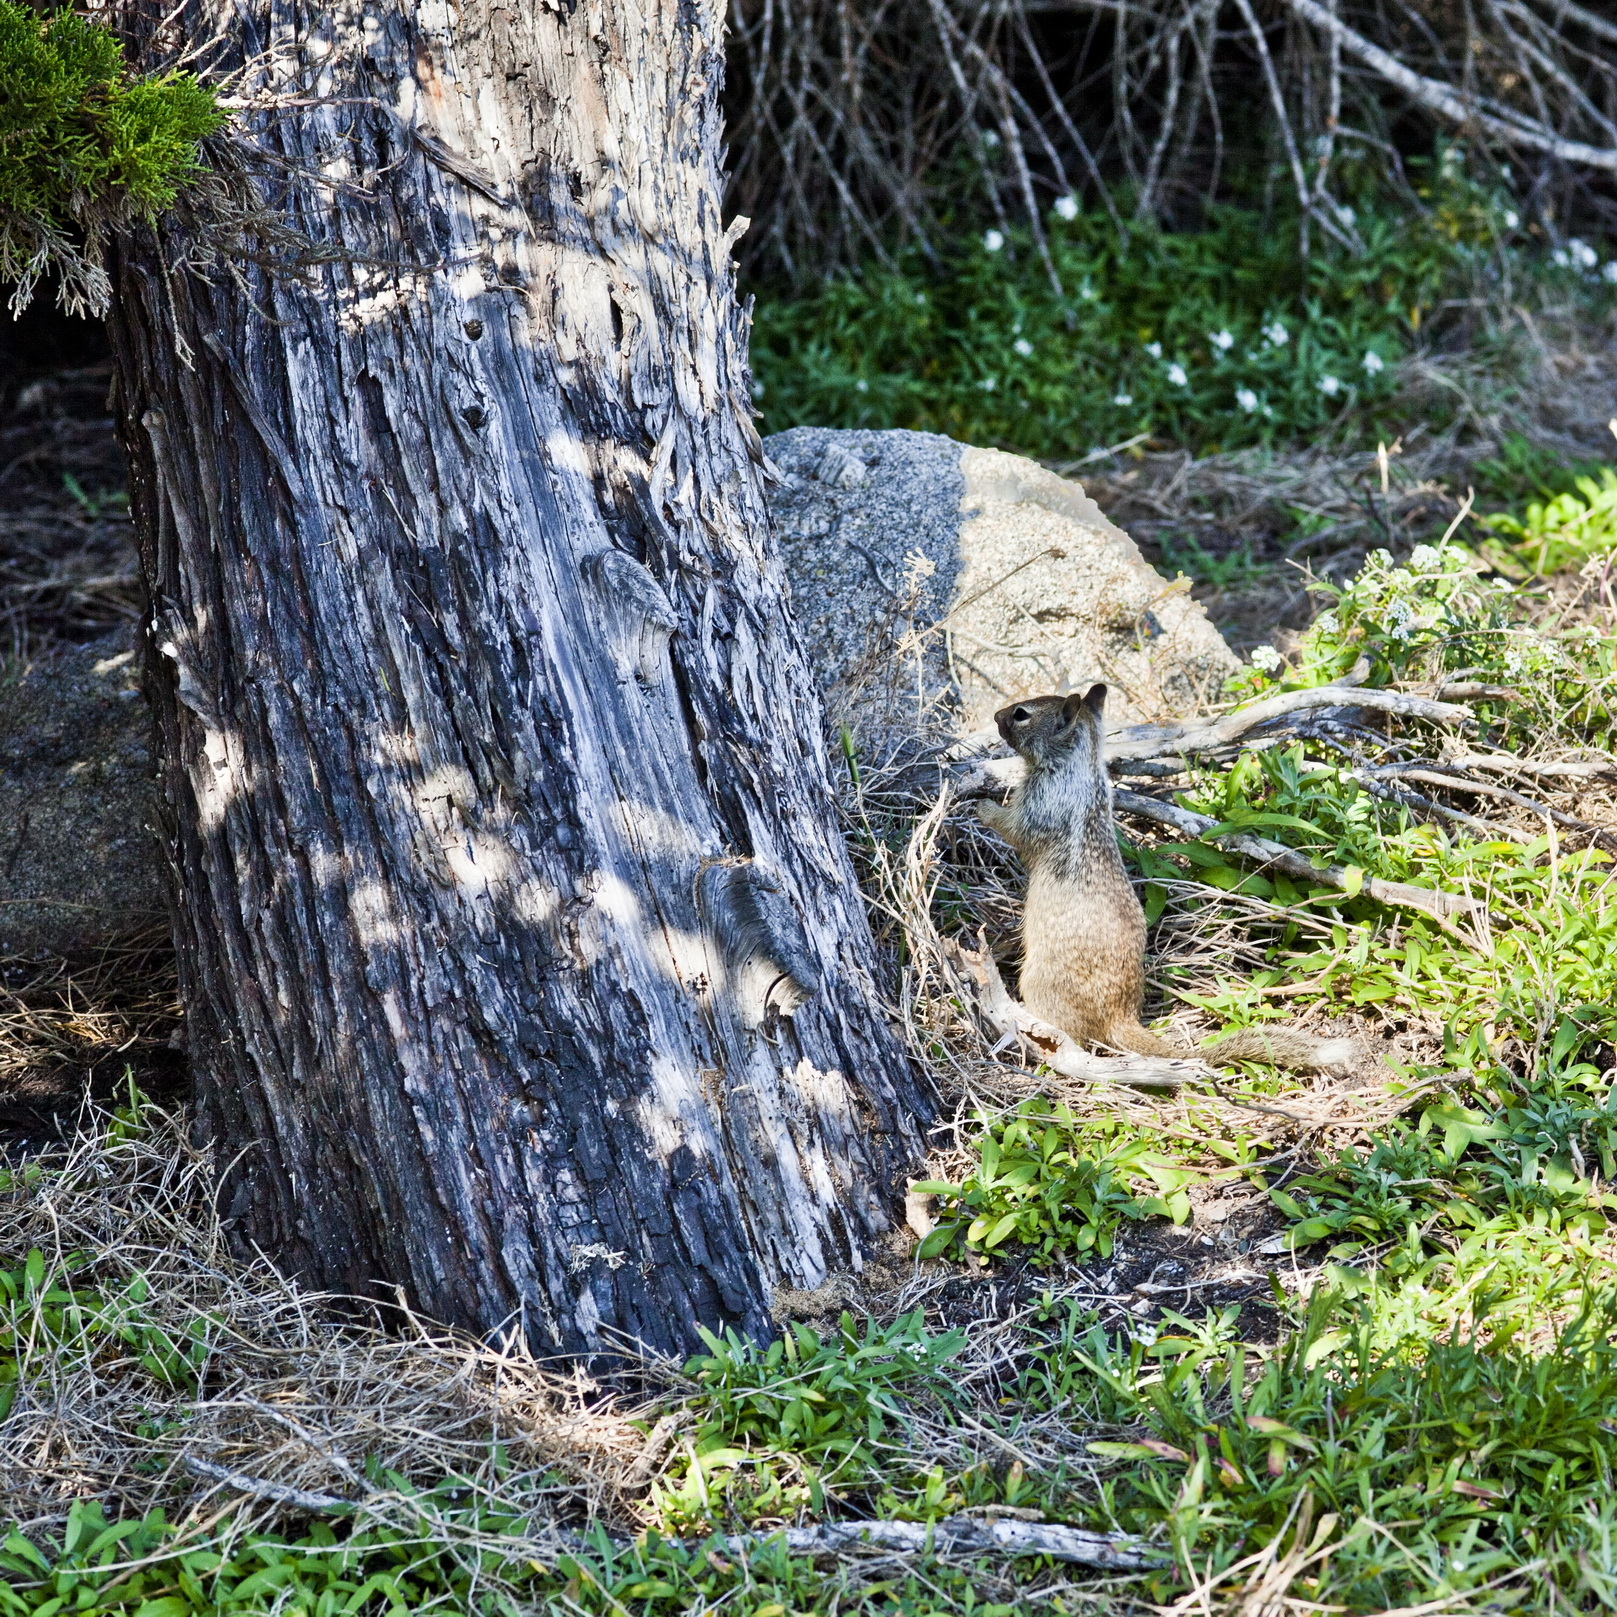 California ground squirrel Otospermophilus beecheyi 17 Mile Drive Monterey CA July 2011 20